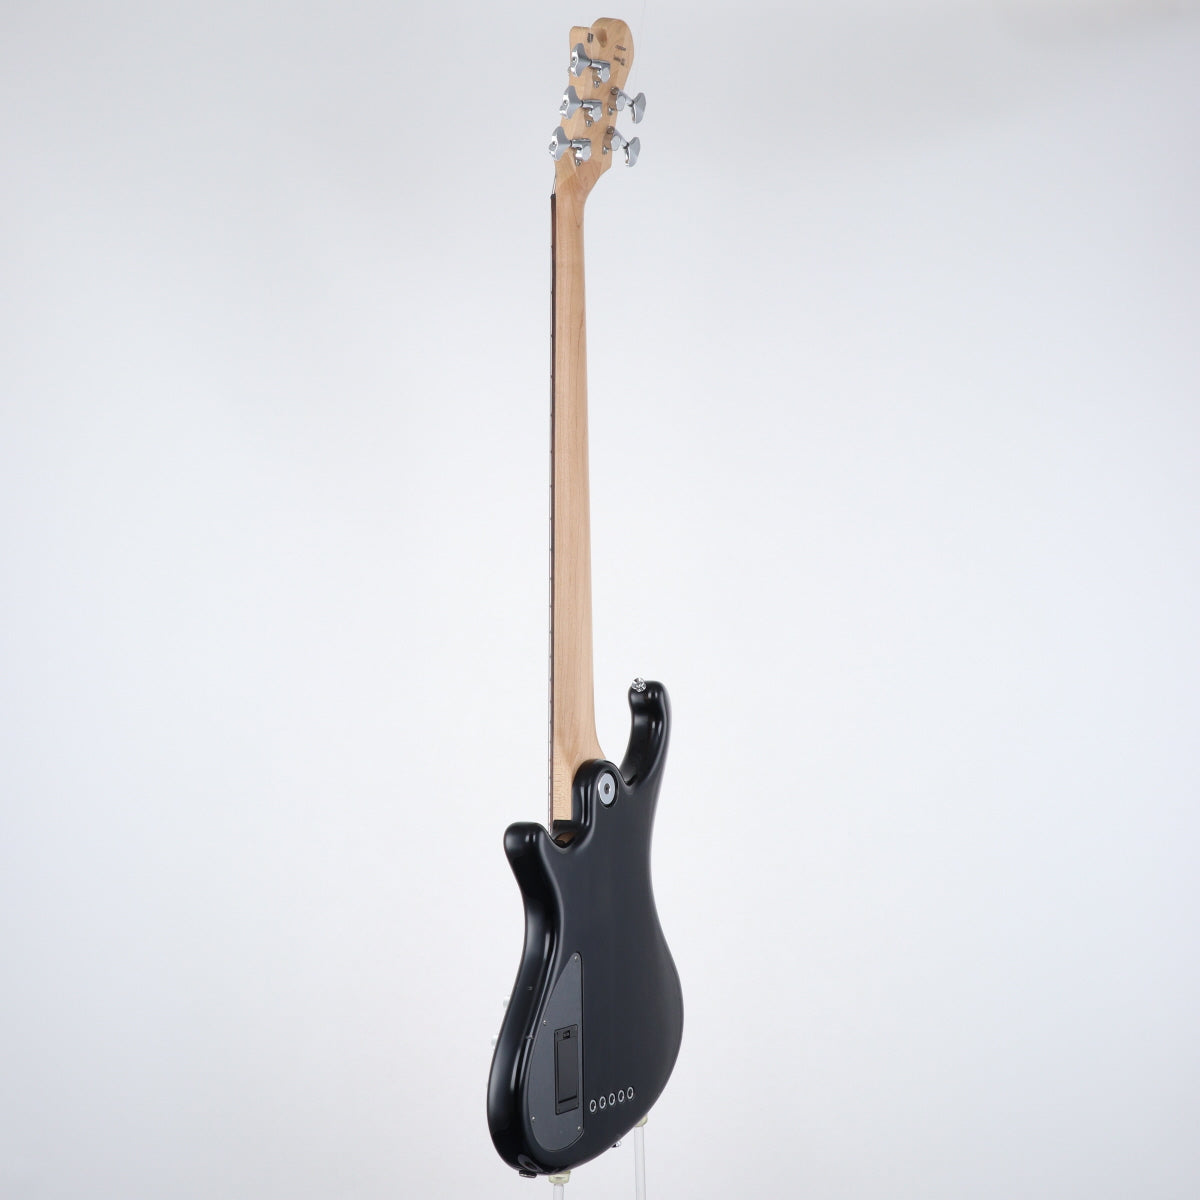 [SN 15043003] USED Freedom Custom Guitar Research / Dulake Flat 5st Karasu(KRS) [12]